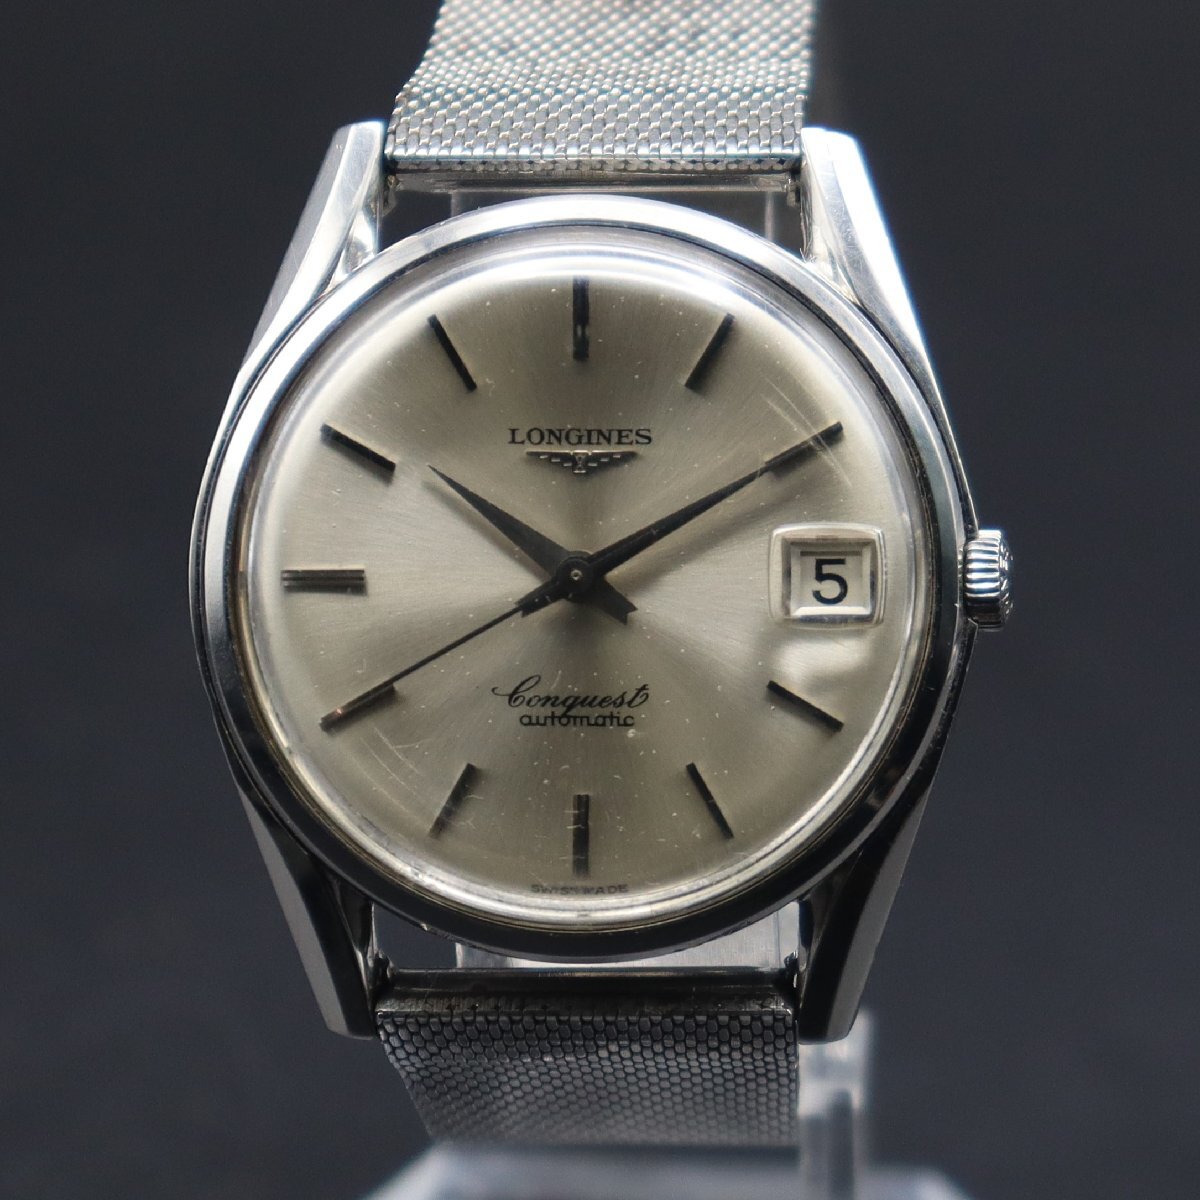 LONGINES CONQUEST ロンジン コンクエスト 自動巻き シルバー文字盤 1960年代 デイト スイス製 純正バックル 保/保証書ケース メンズ腕時計